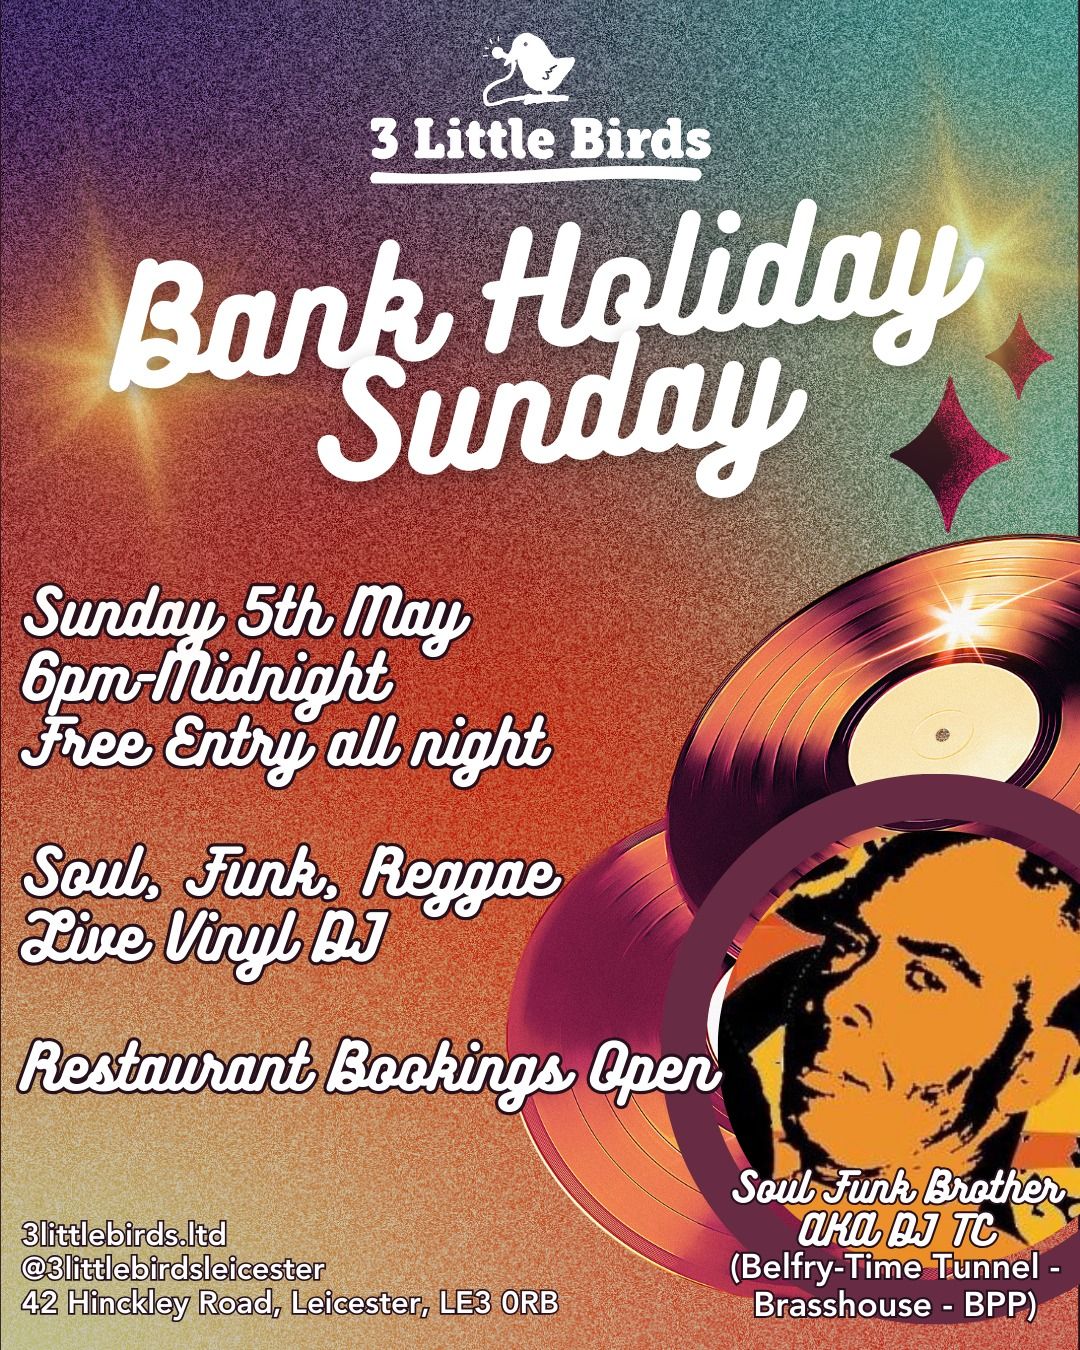 Bank Holiday Sunday - Live Vinyl